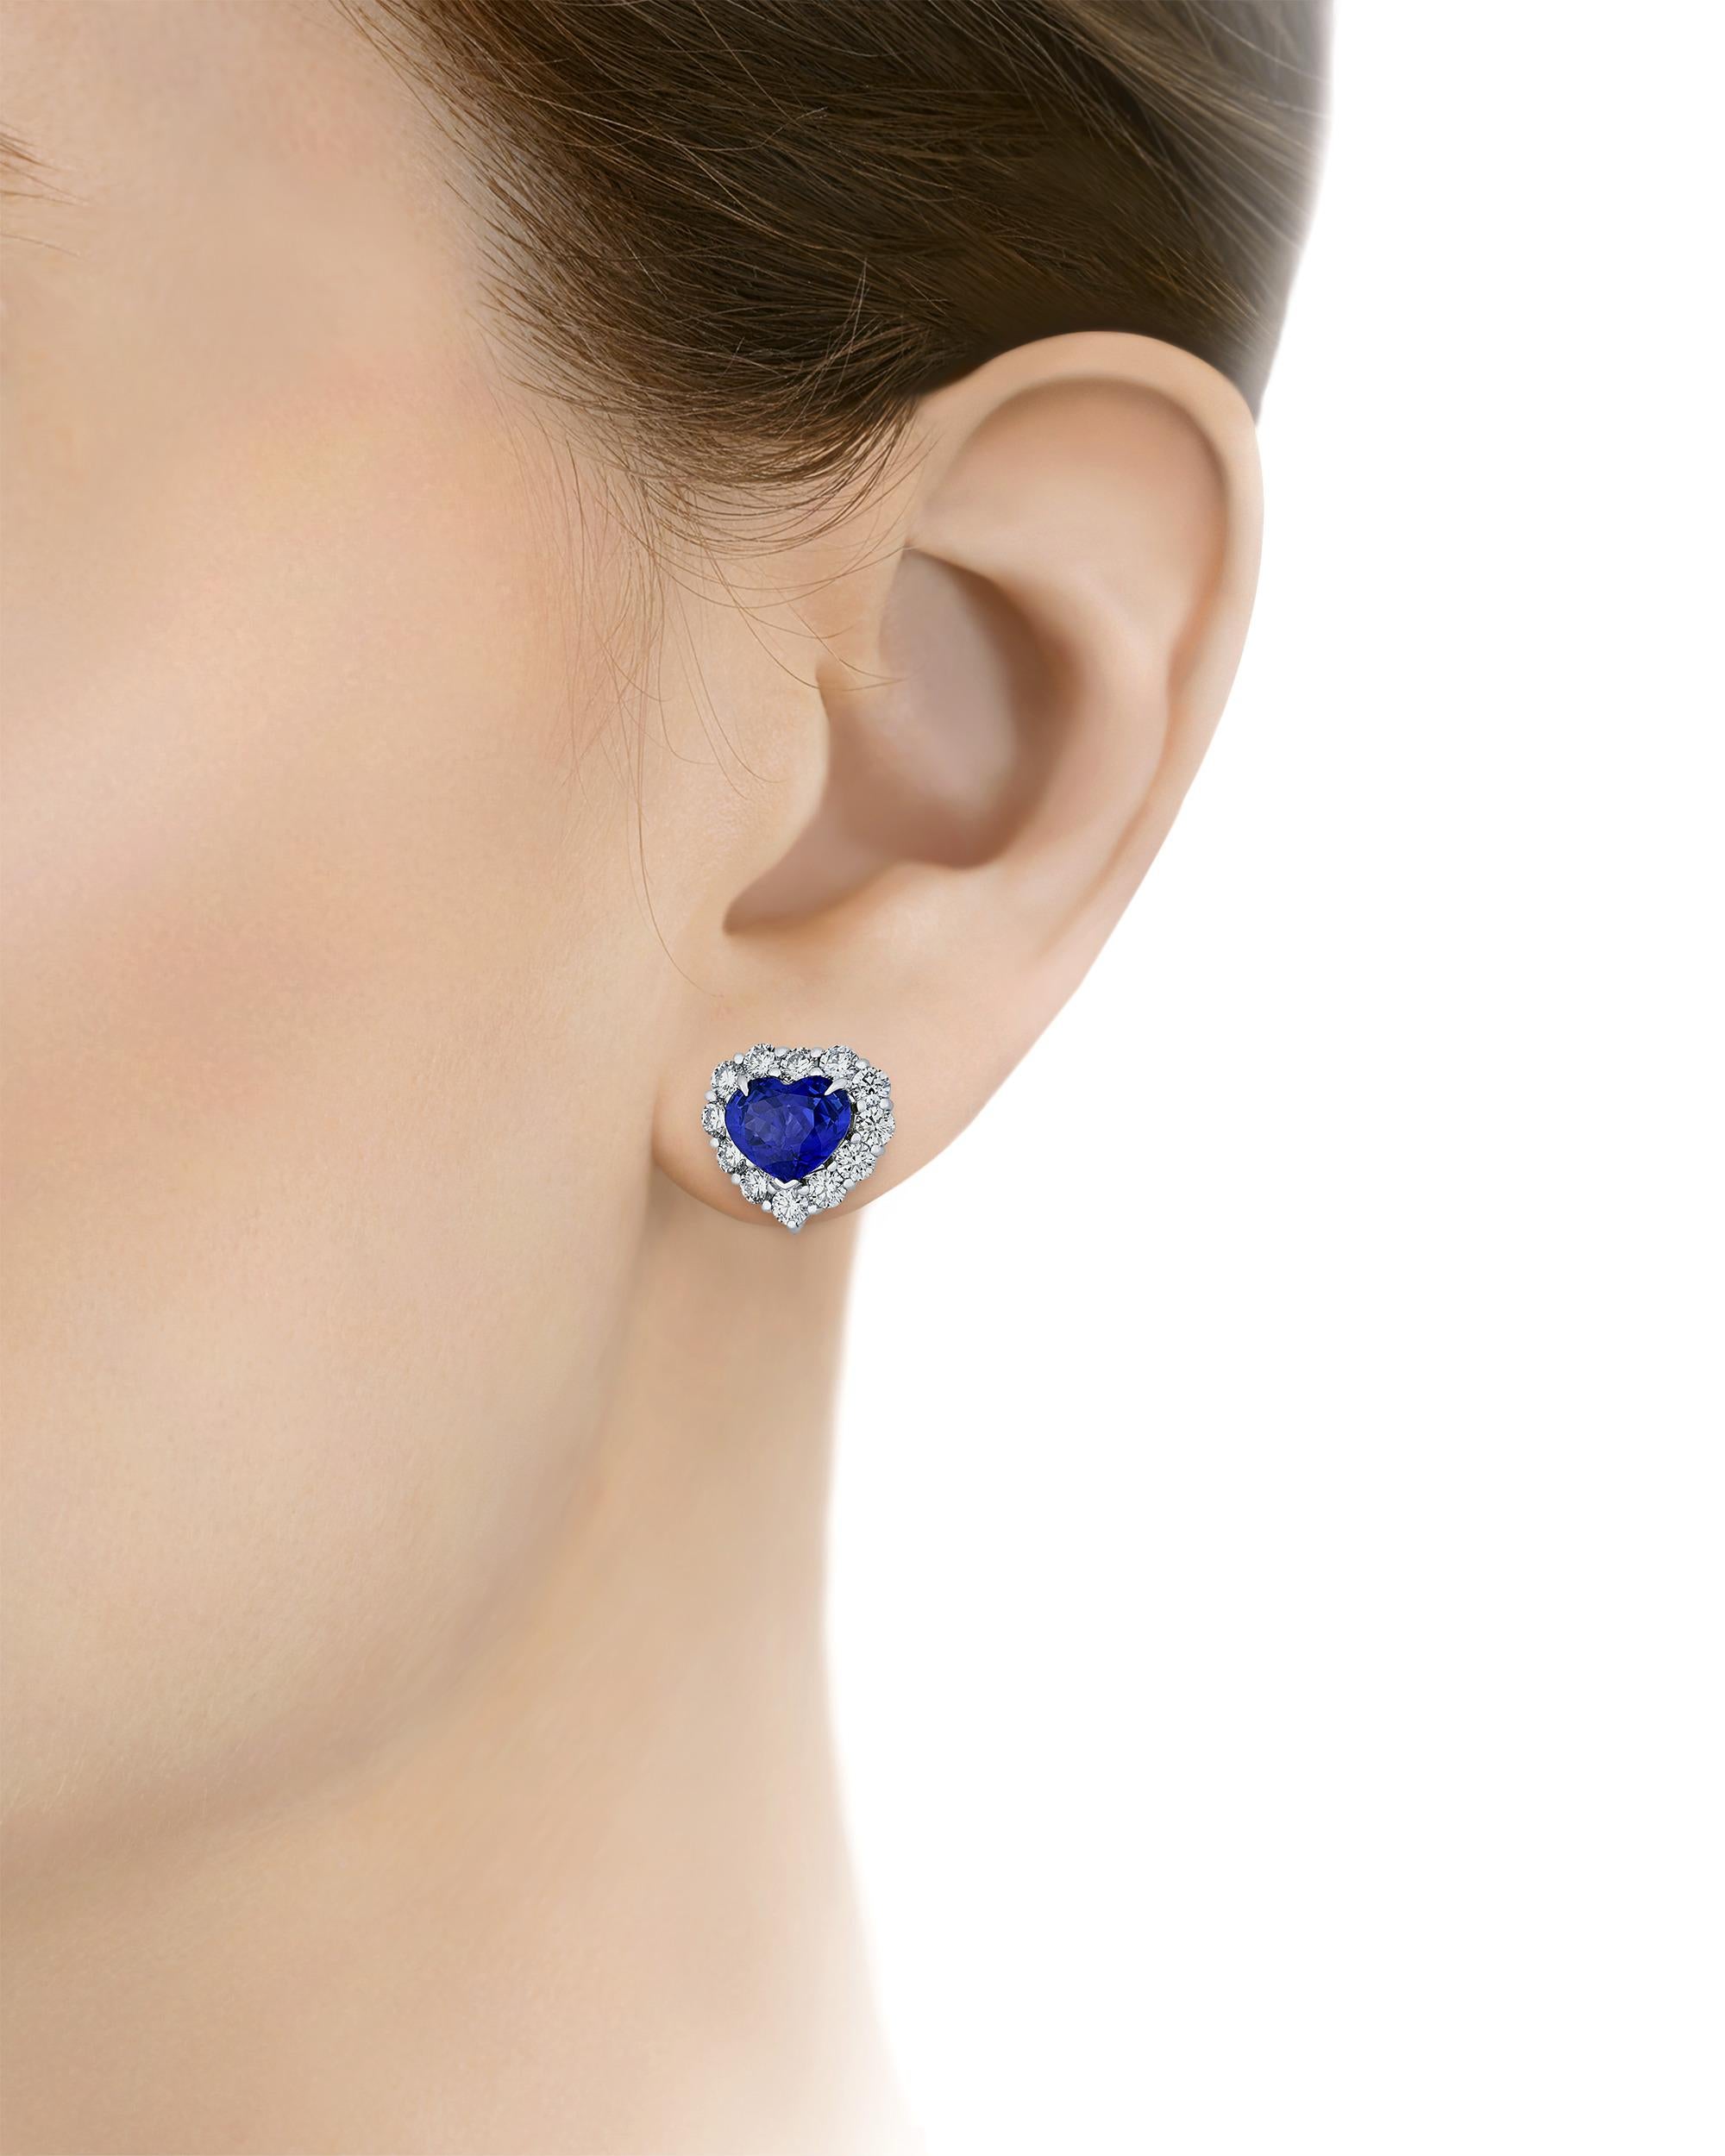 Brilliant Cut Ceylon Sapphire Heart Earrings, 6.11 Carats For Sale